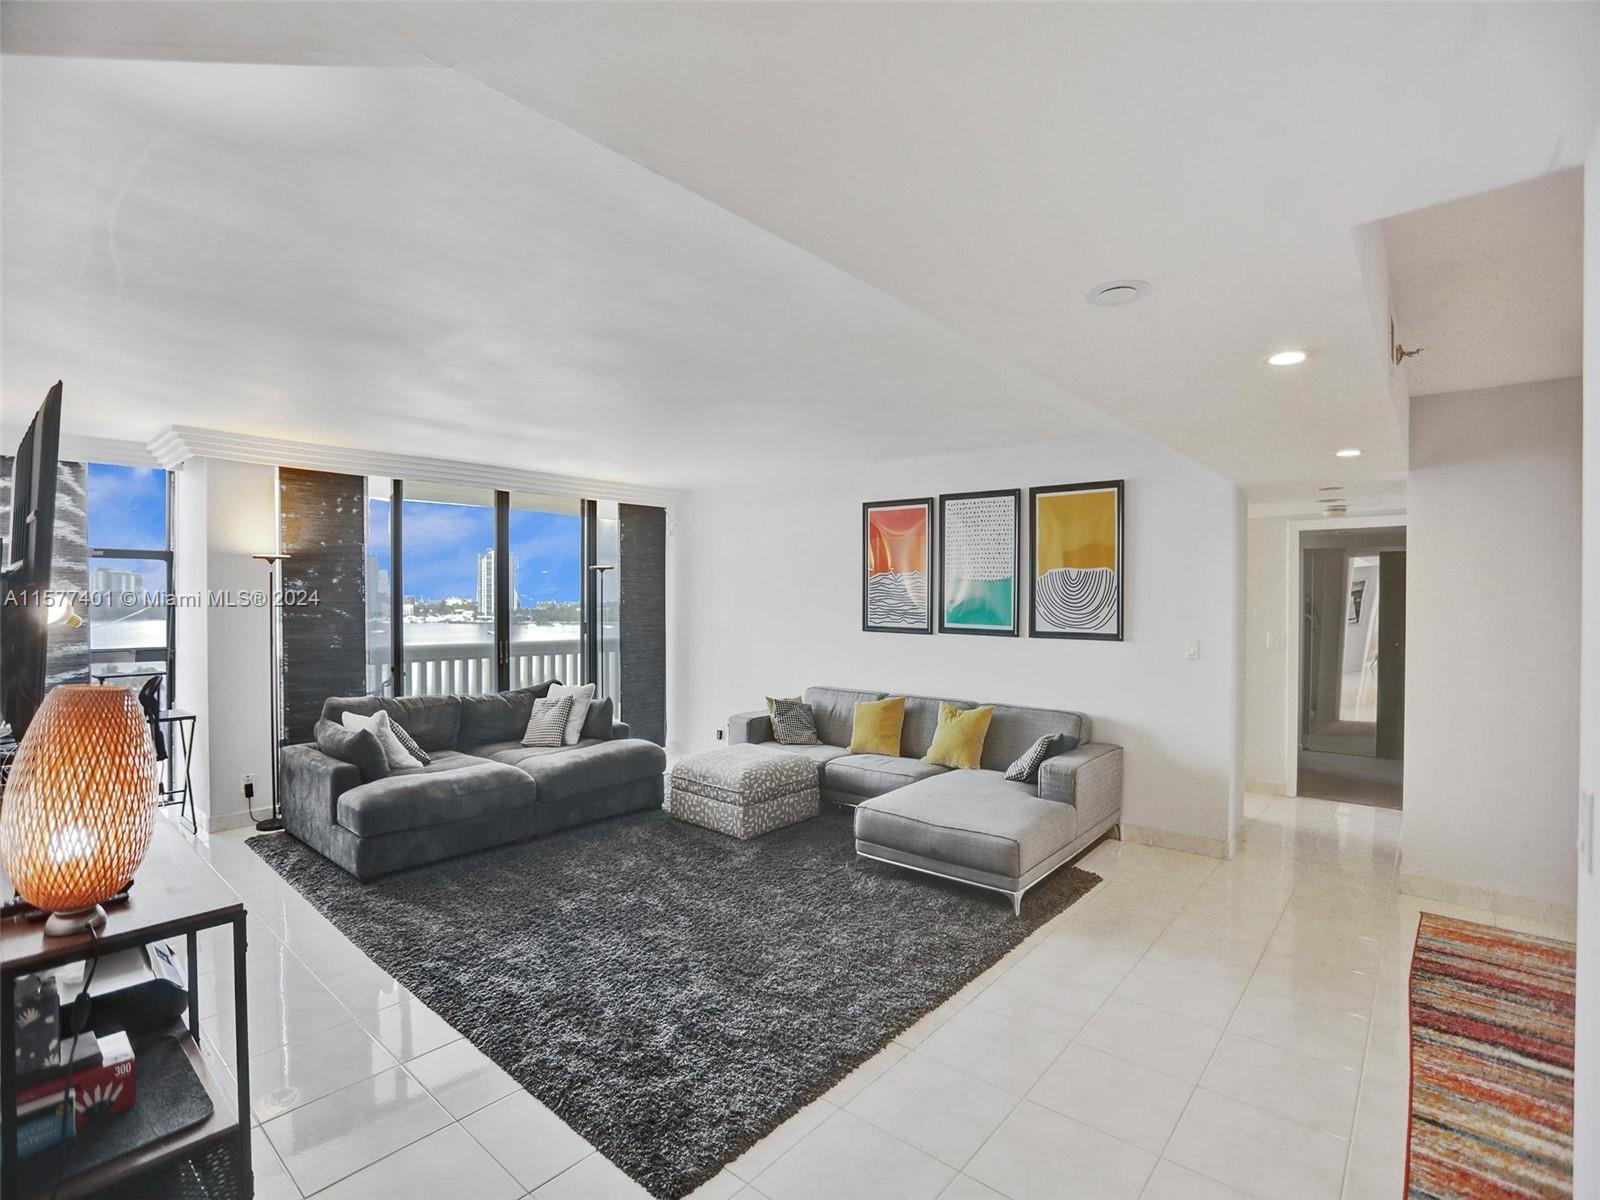 Property for Sale at 1000 W Island Blvd 802, Aventura, Miami-Dade County, Florida - Bedrooms: 3 
Bathrooms: 3  - $699,000